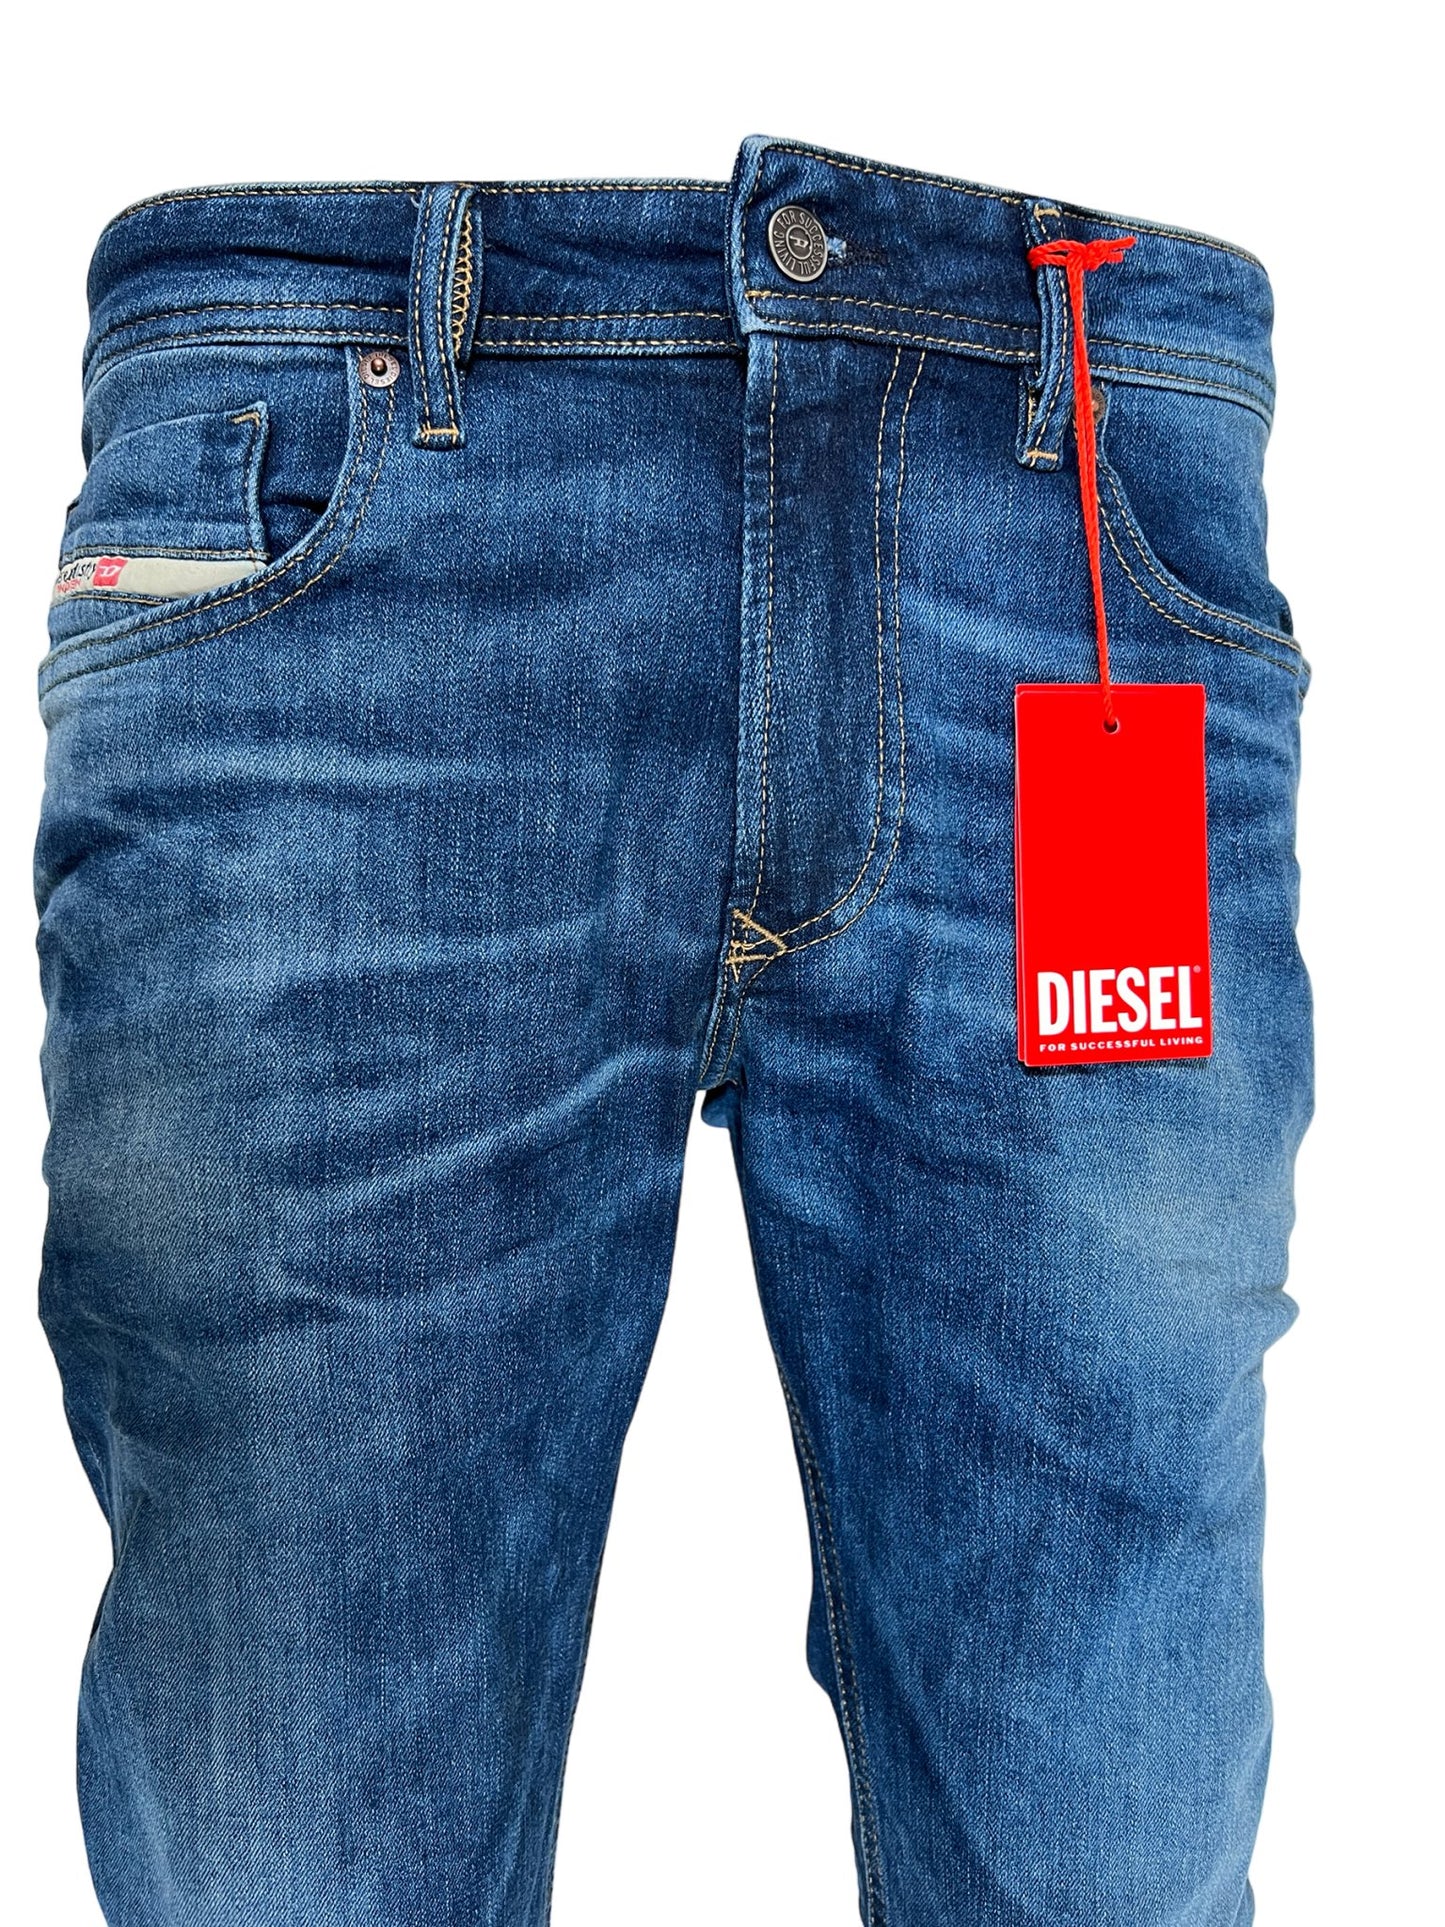 A pair of DIESEL 1979 SLEENKER PFAU DENIM jeans with a red tag on them.